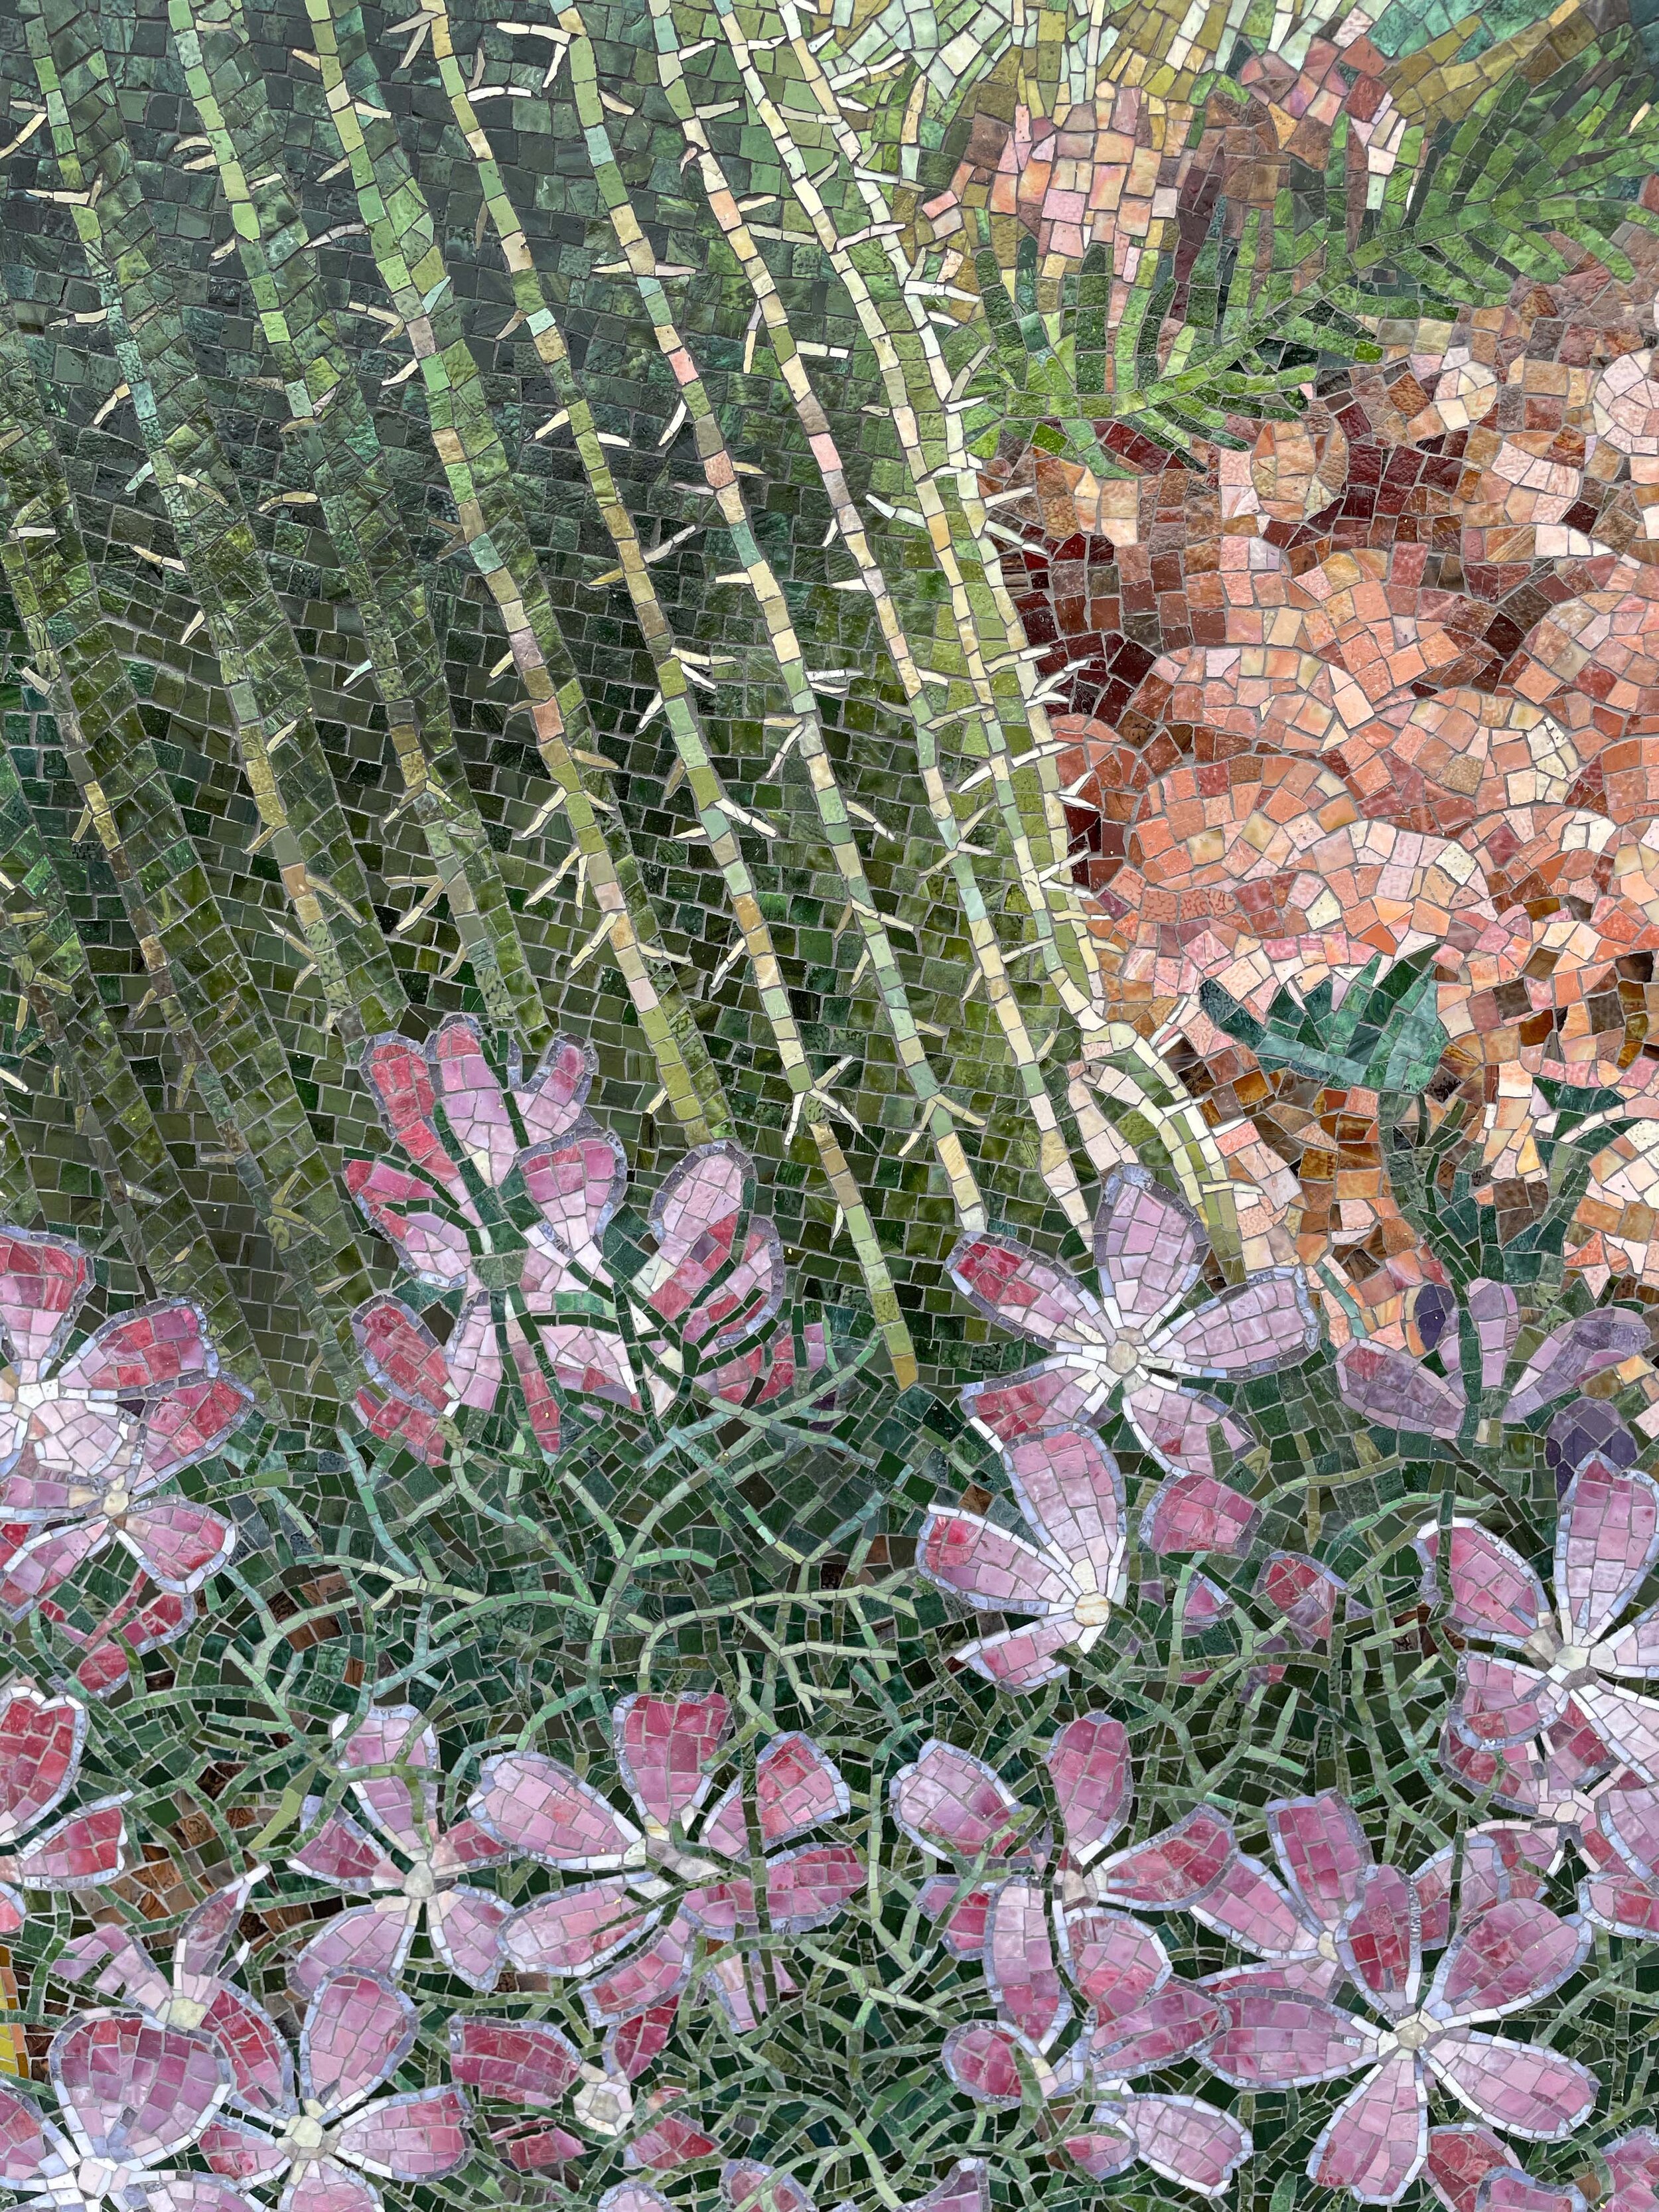 cactus and purple flower detail.jpg